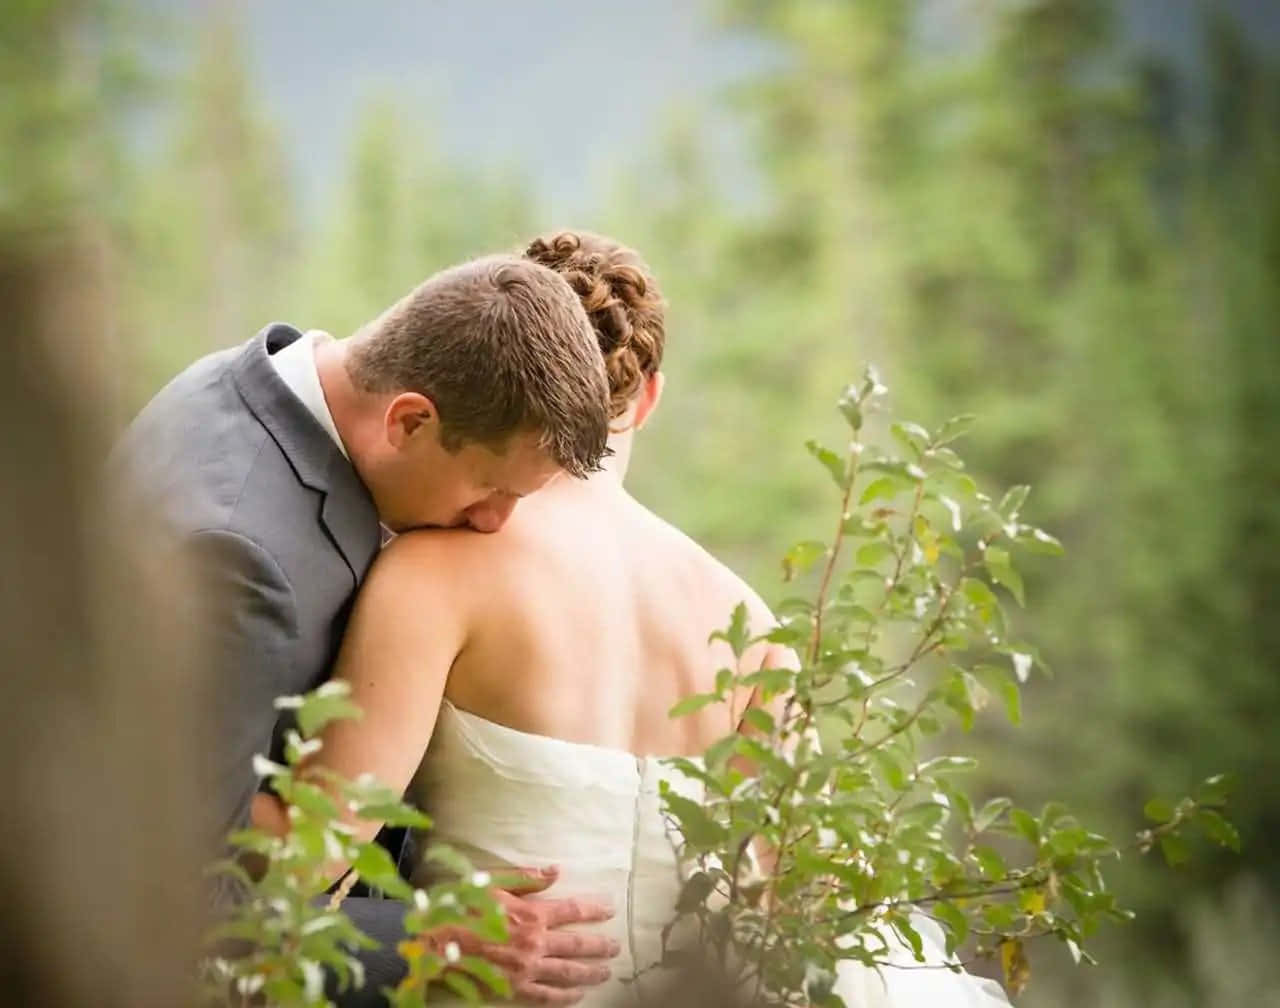 A beautiful, romantic wedding couple embracing under a rose garden trellis.